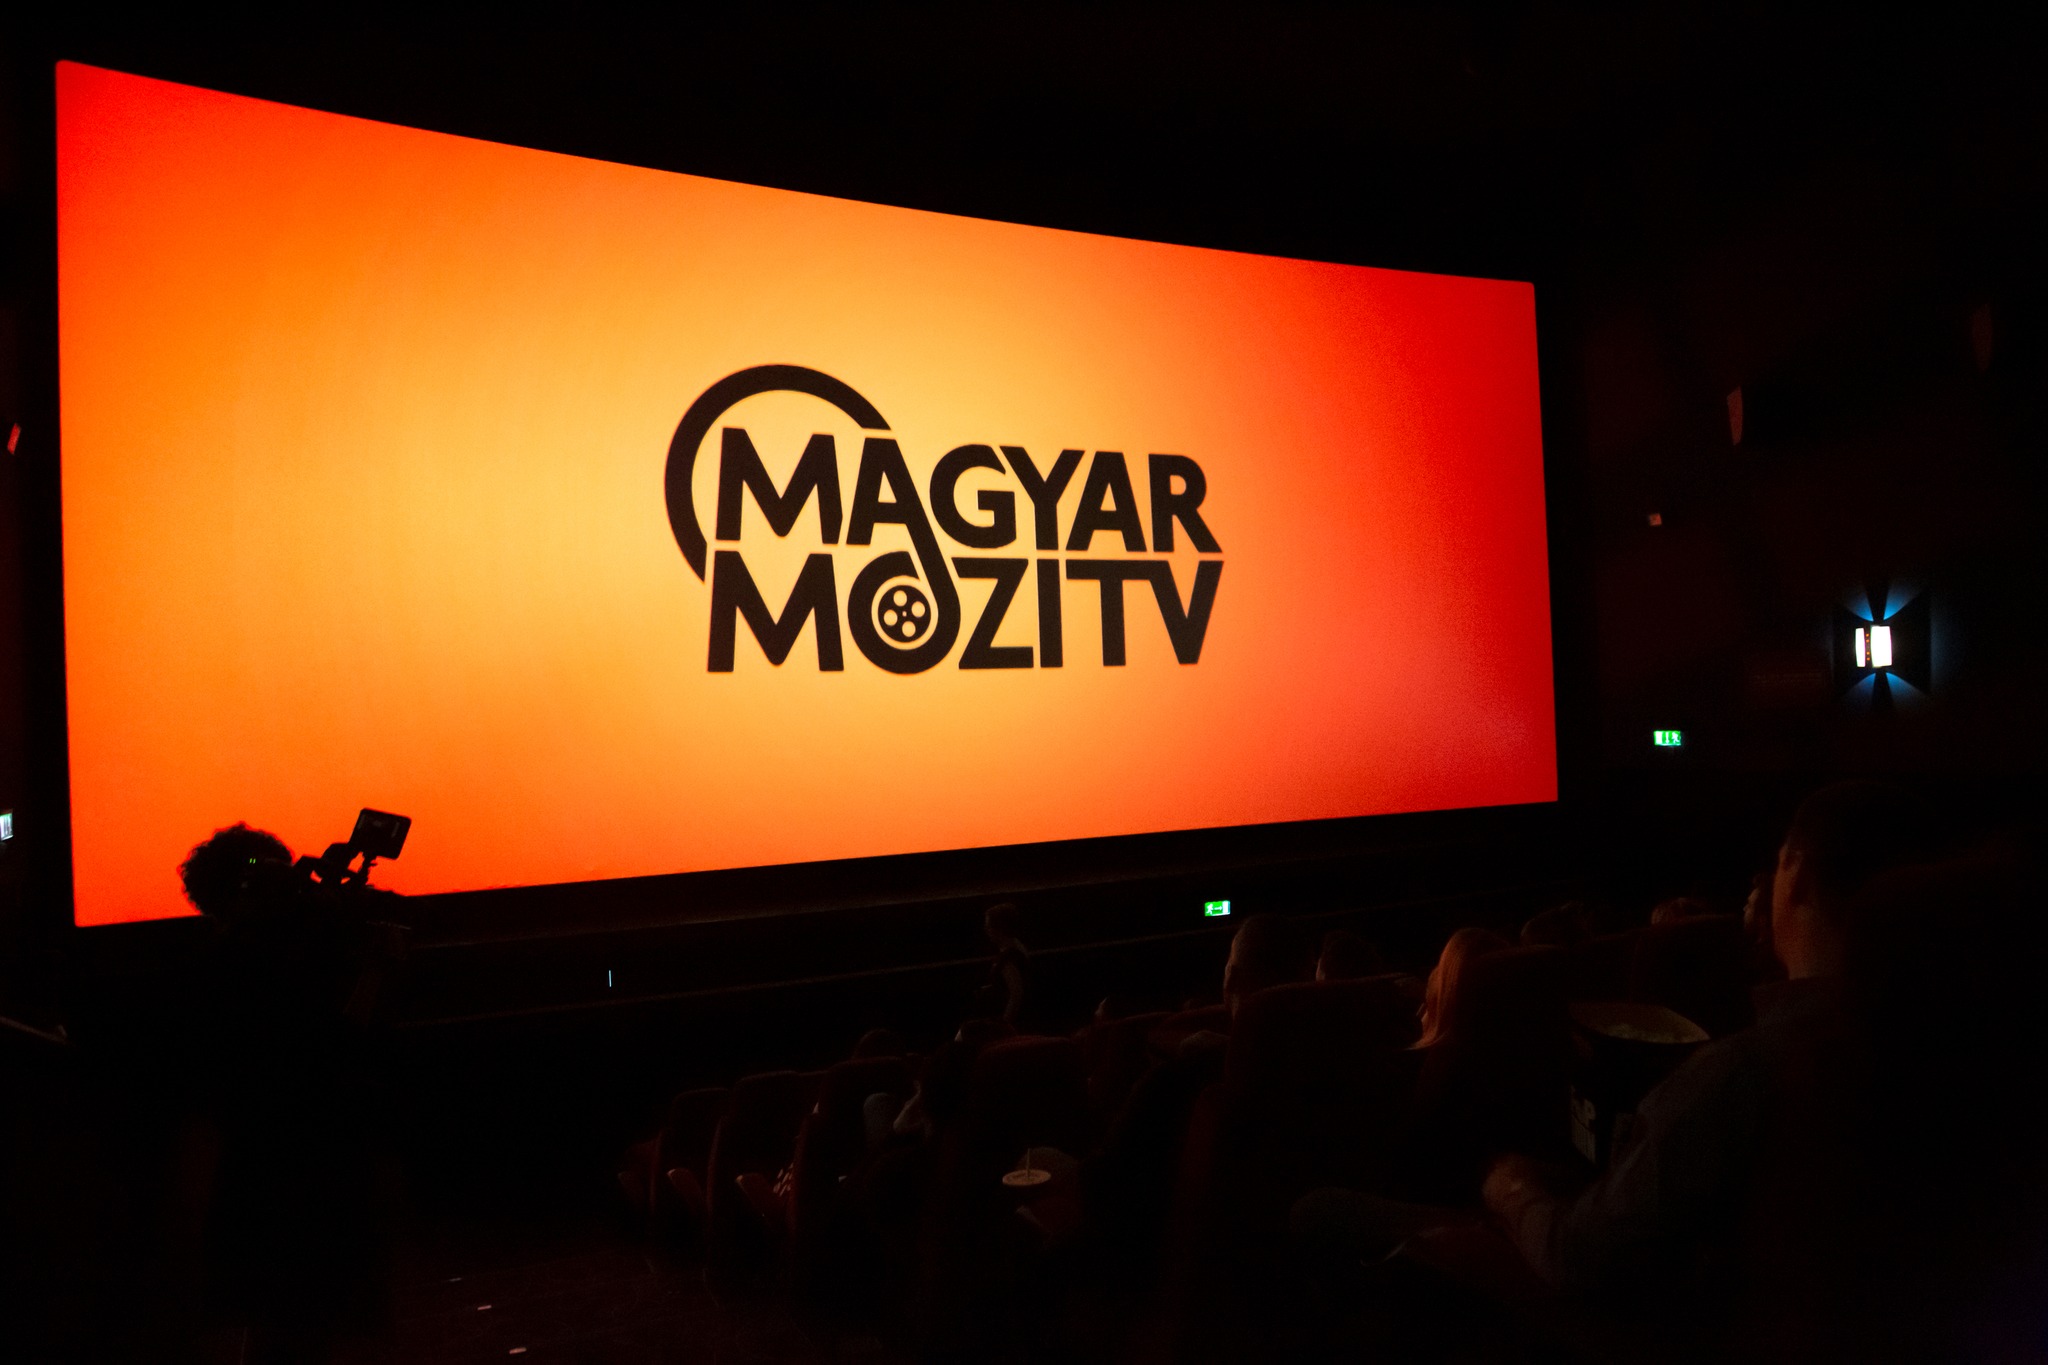 Noul program TV Magyar Mozi maghiar